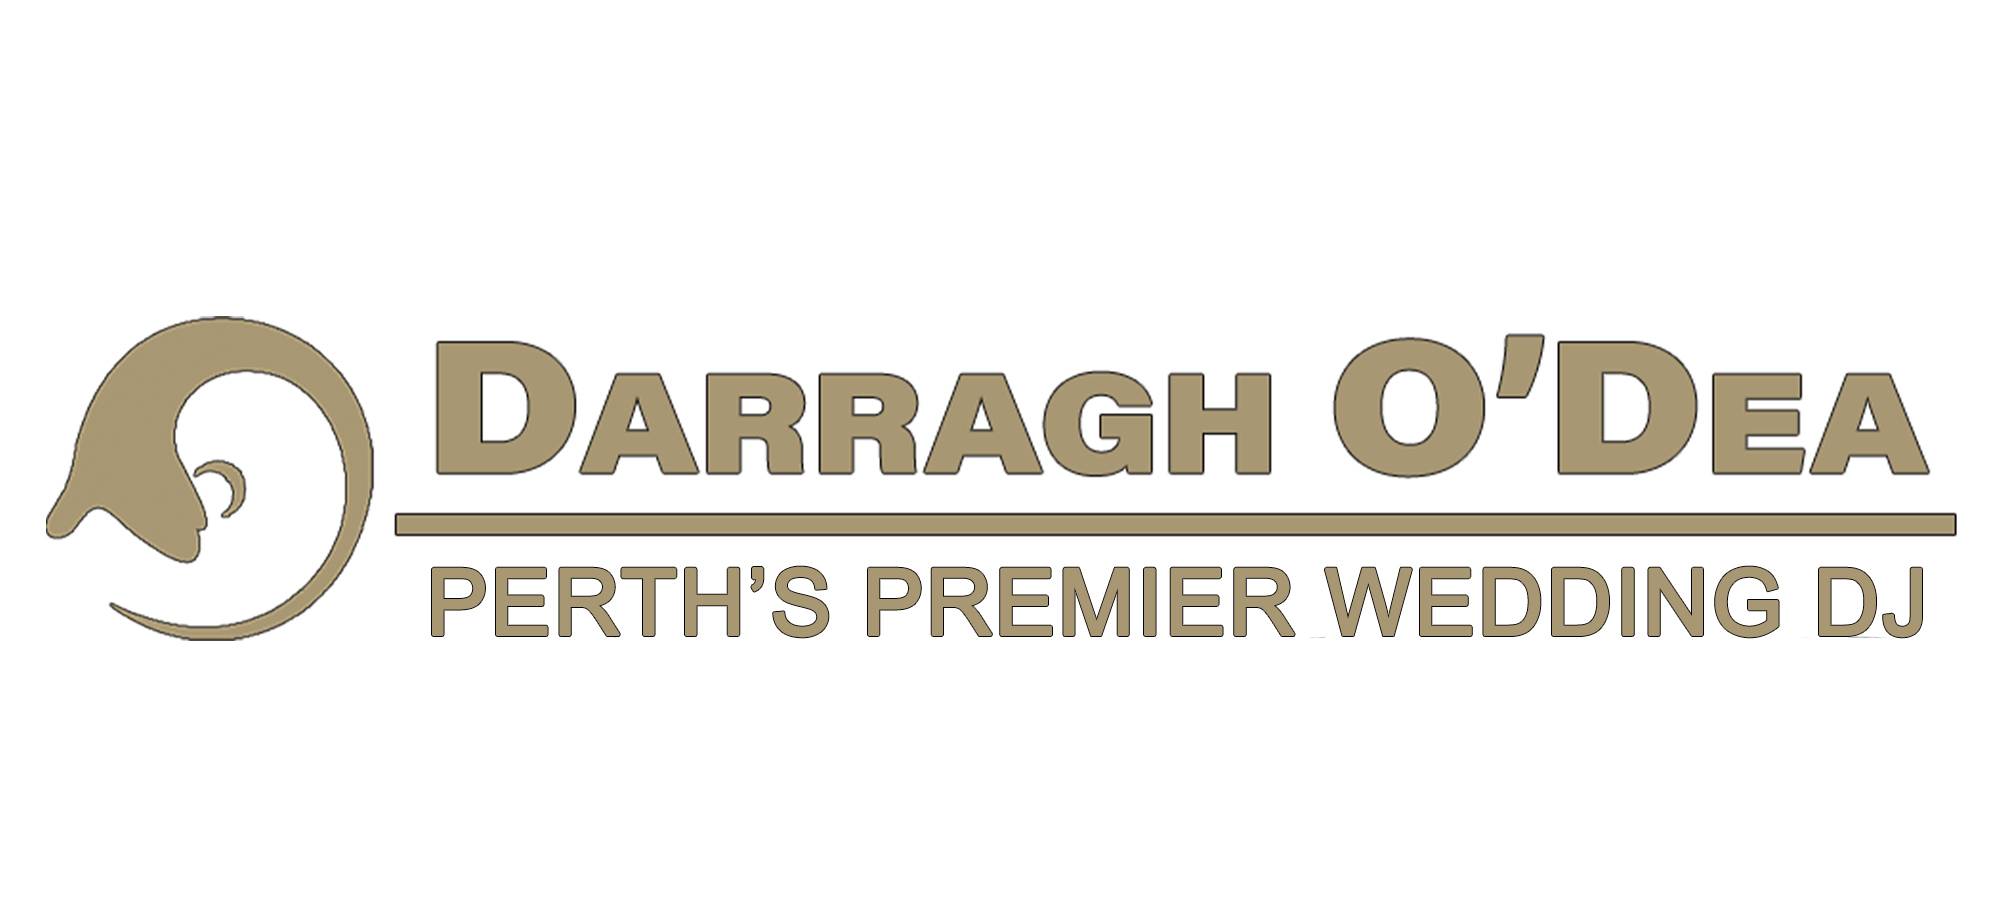 Premier Wedding DJ Services in Perth, Australia | Darragh O'Dea